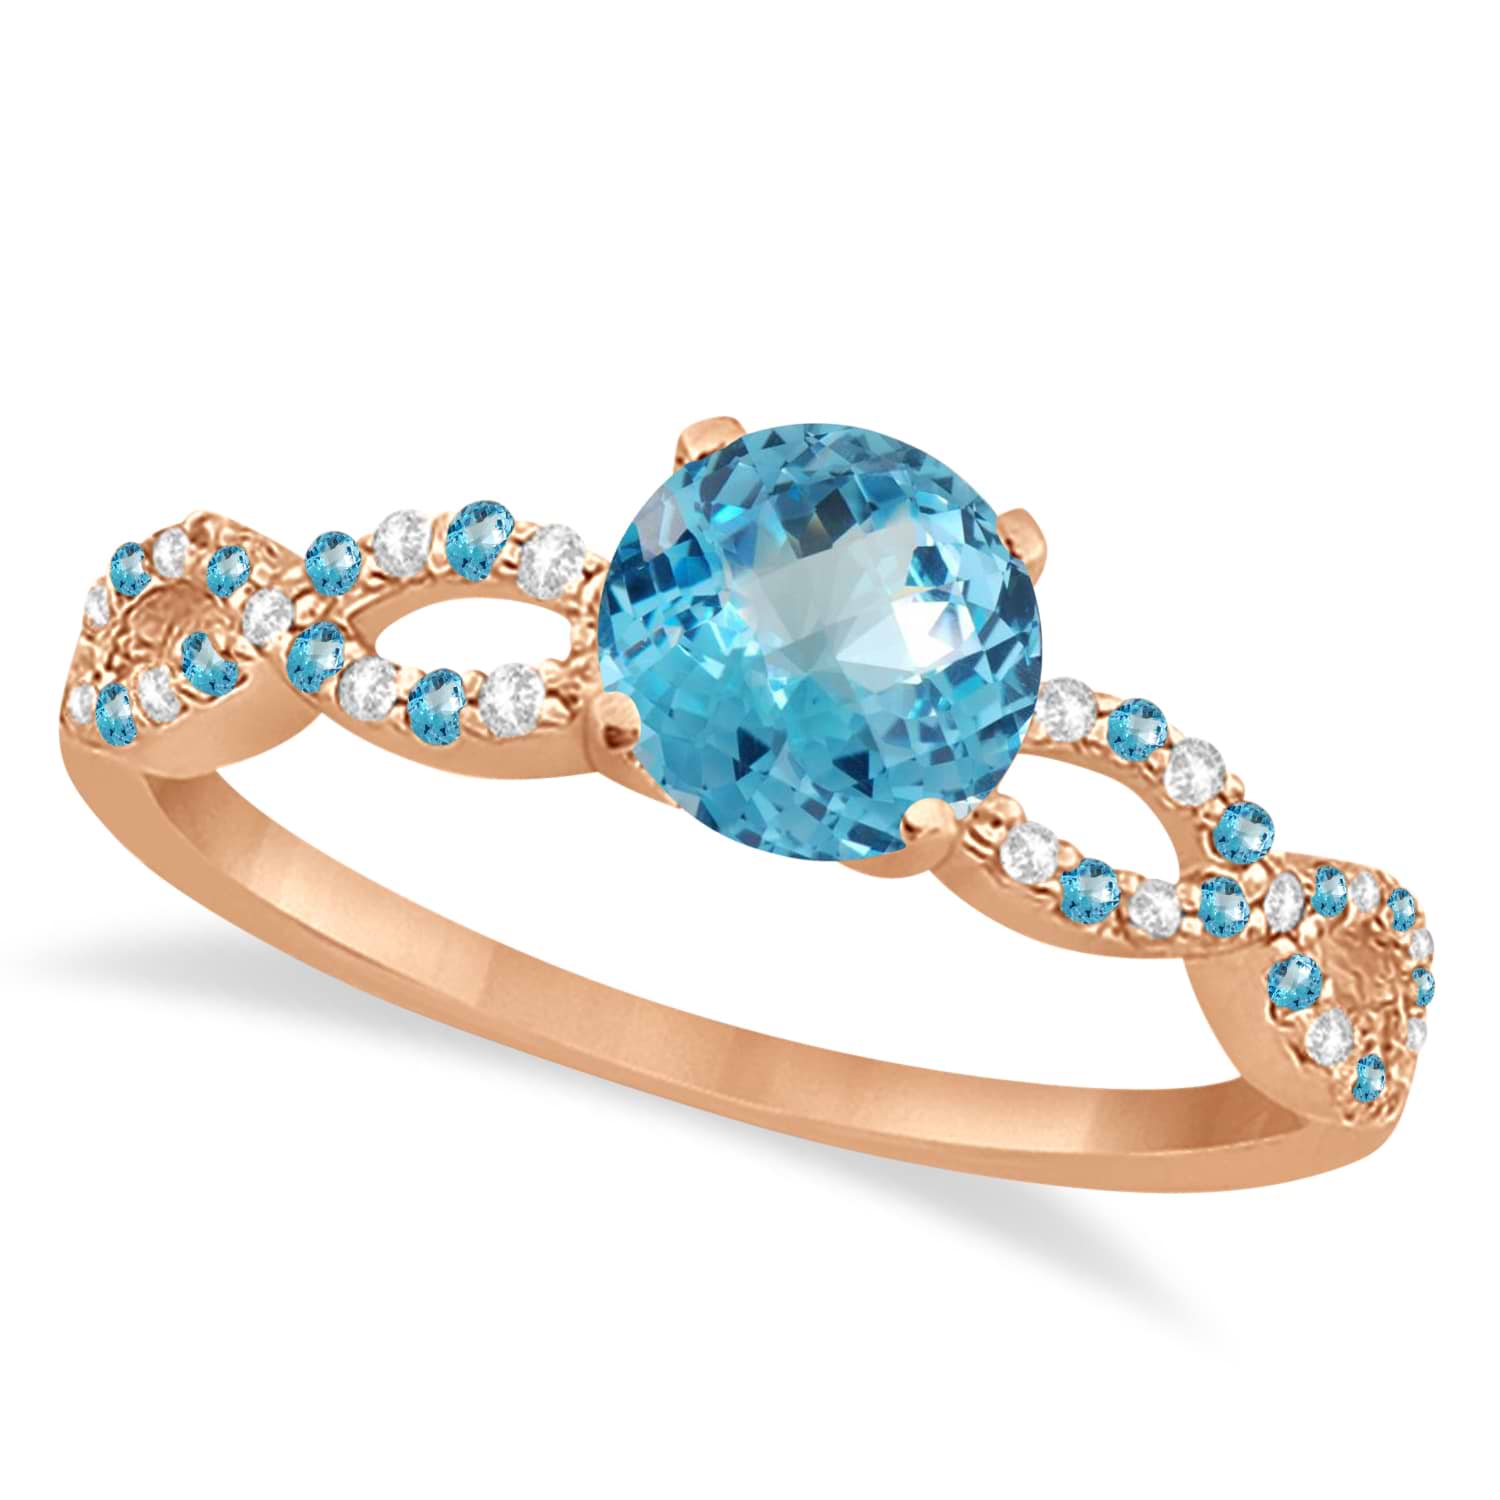 Infinity Diamond & Blue Topaz Engagement Ring 18k Rose Gold 1.05ct